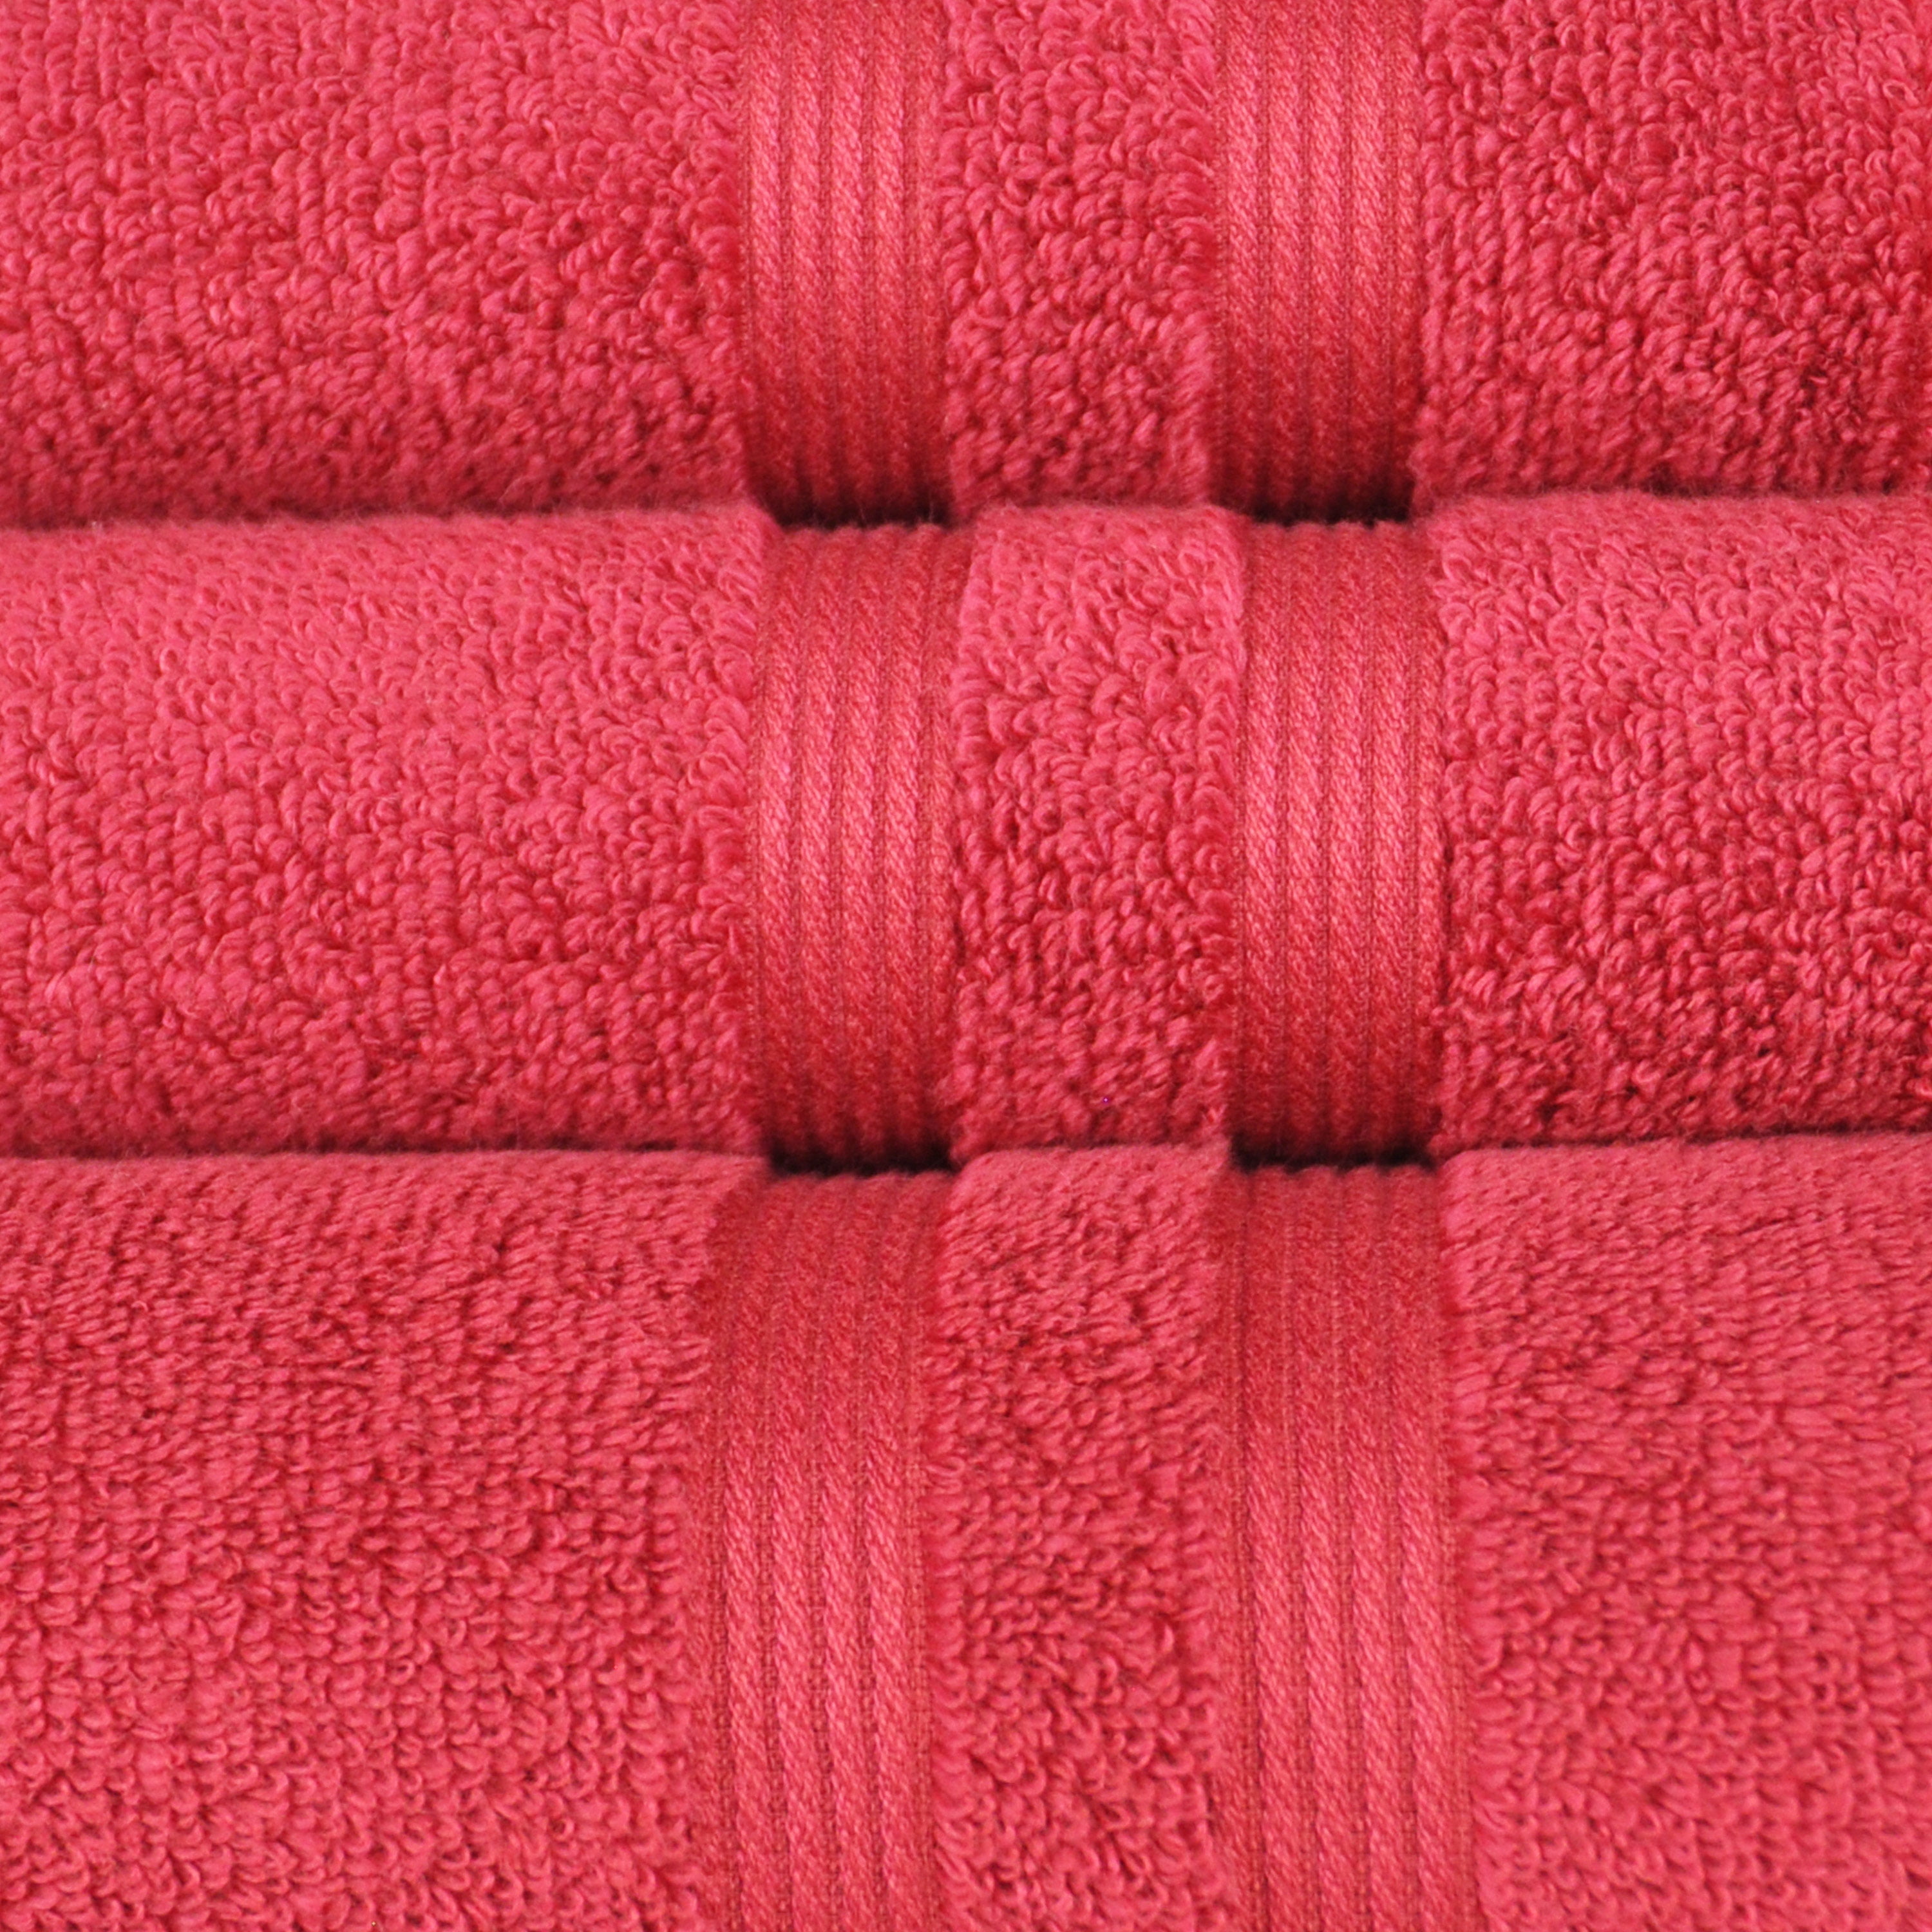 Haute Red Hand Towel